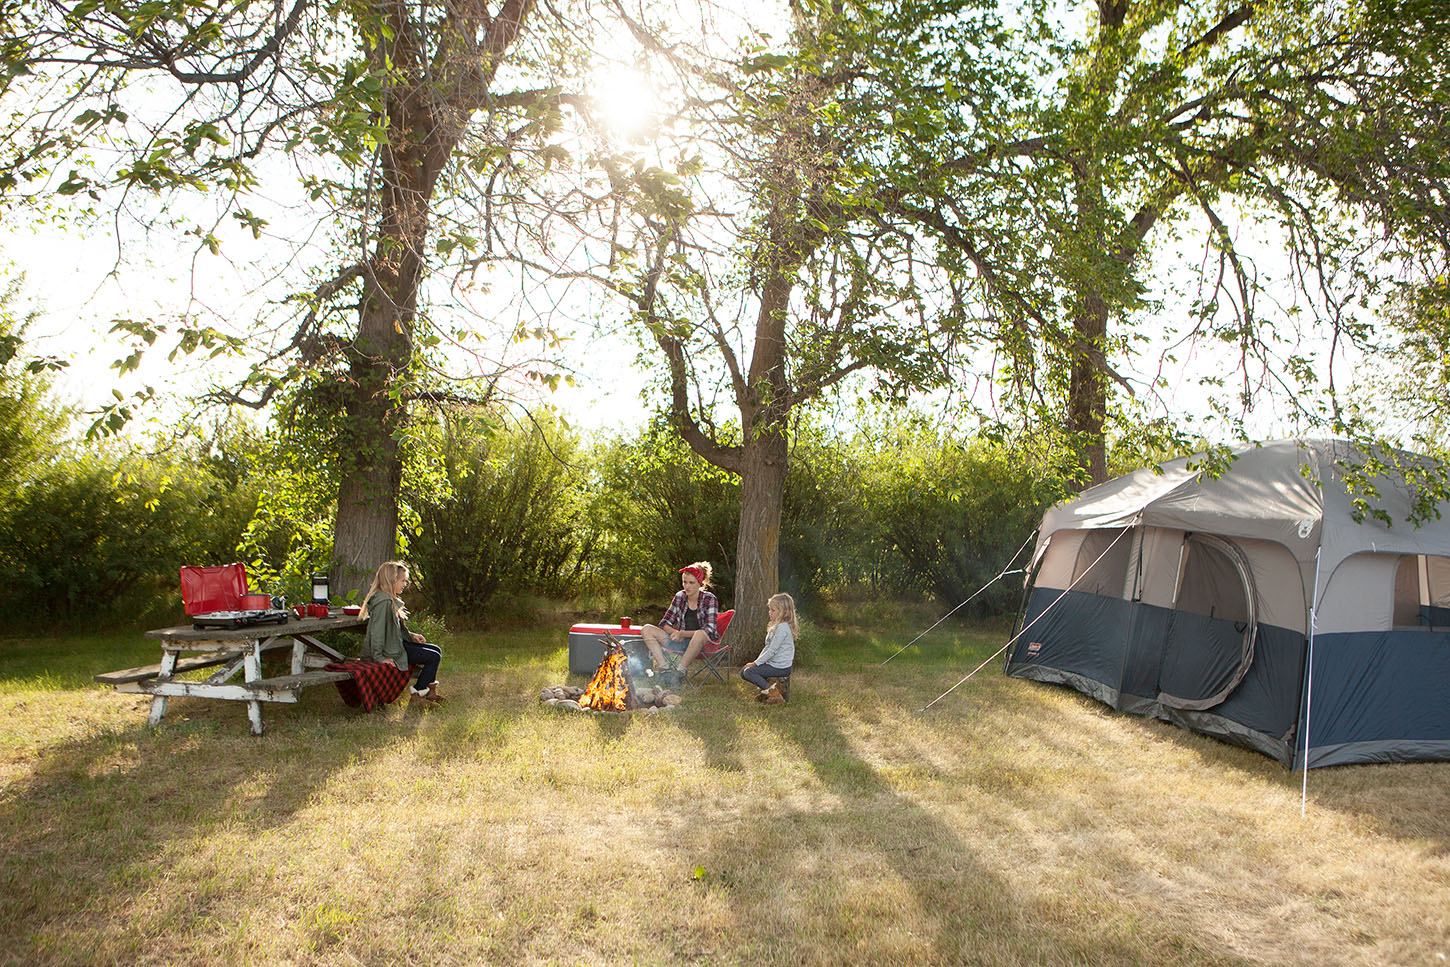 Planning a Backyard Camping Adventure